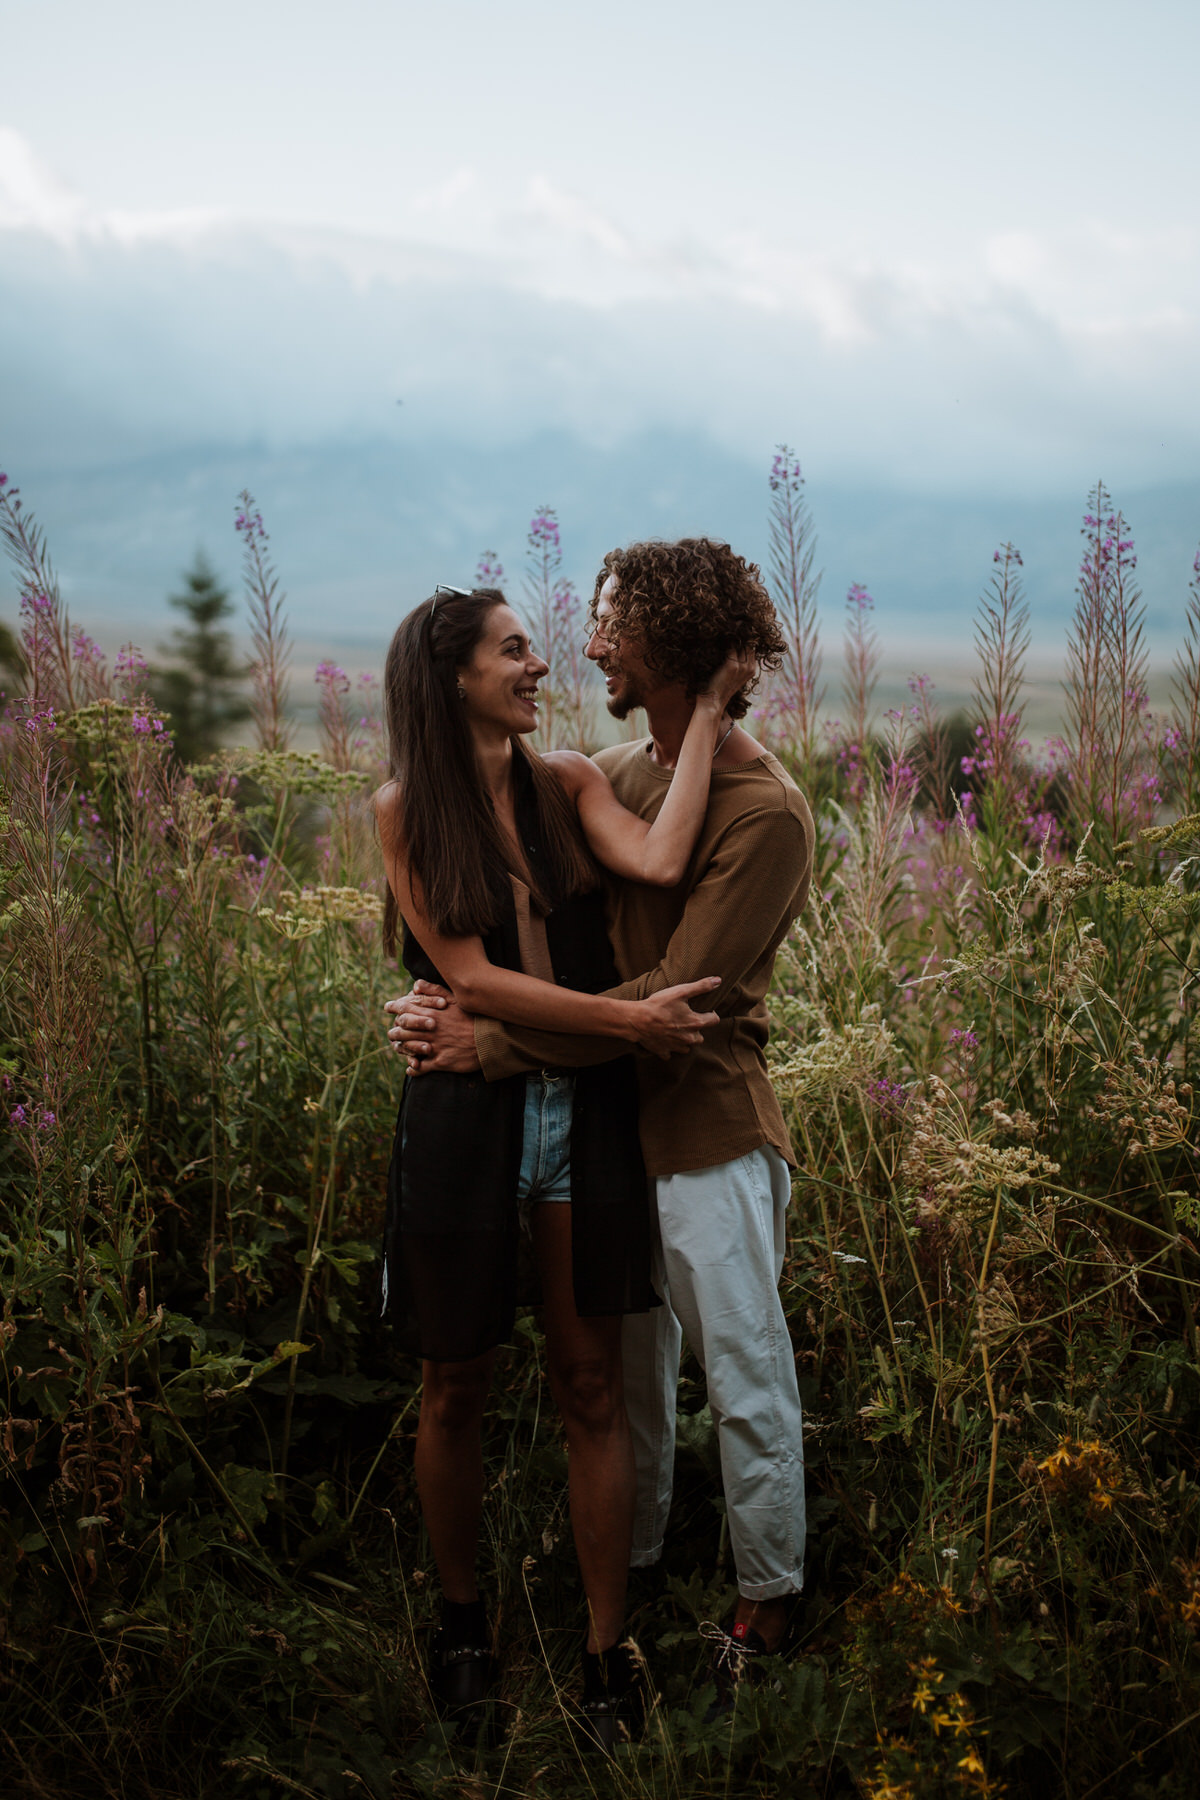 Love in the Fields by Soriafilms